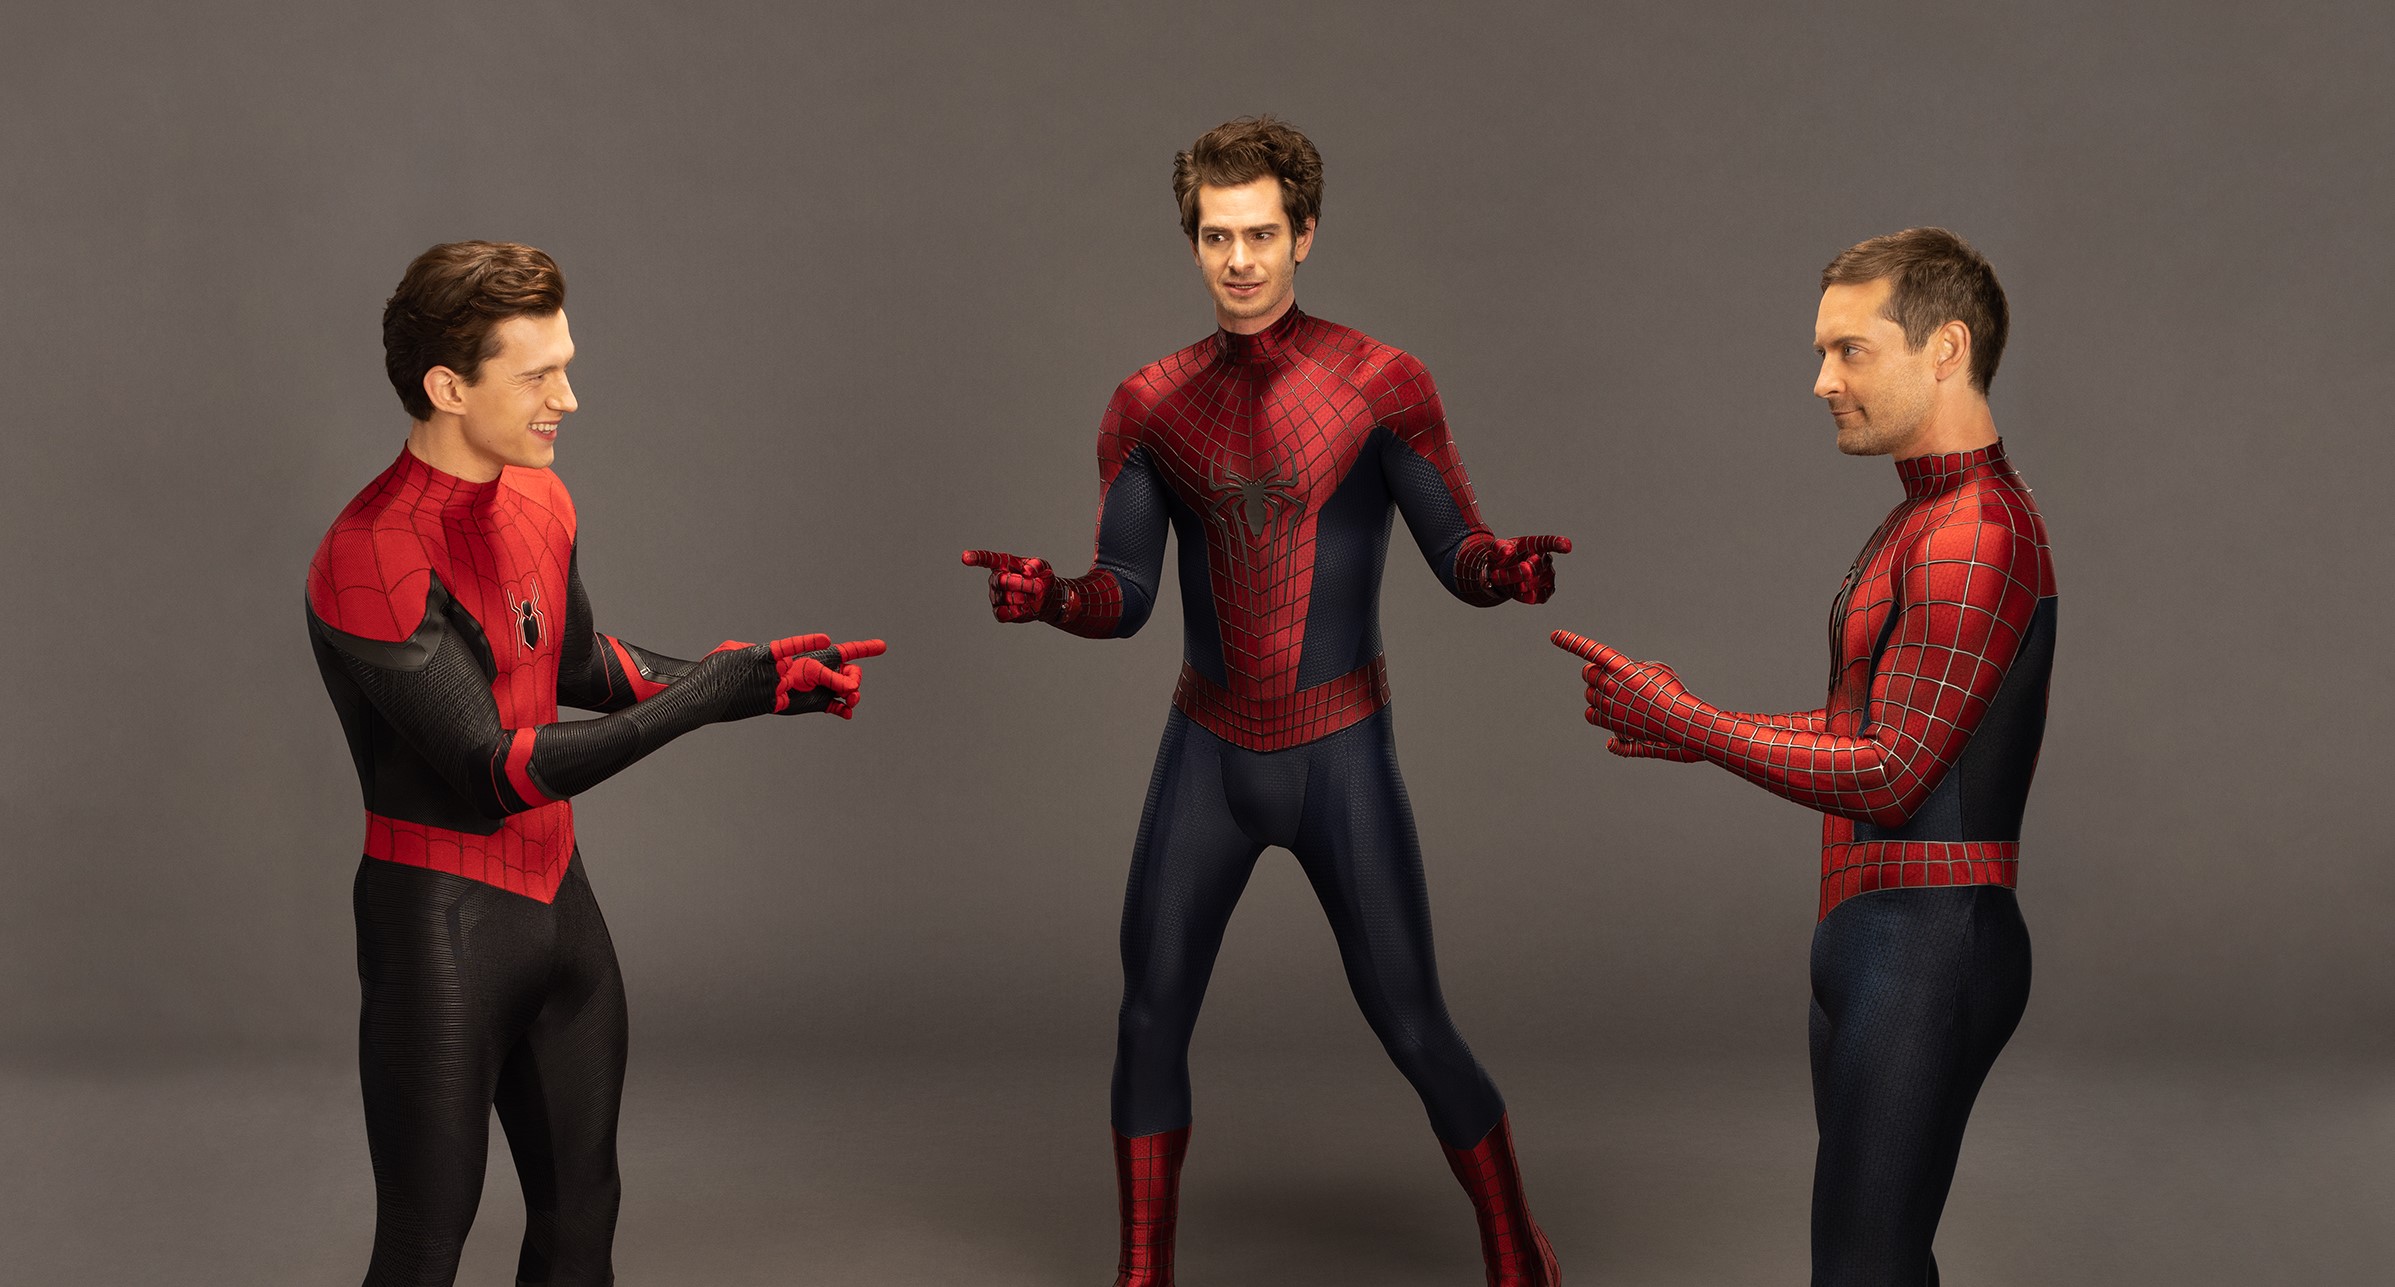 ‘Spider-Man: No Way Home’ stars recreate the iconic Spider-Man meme